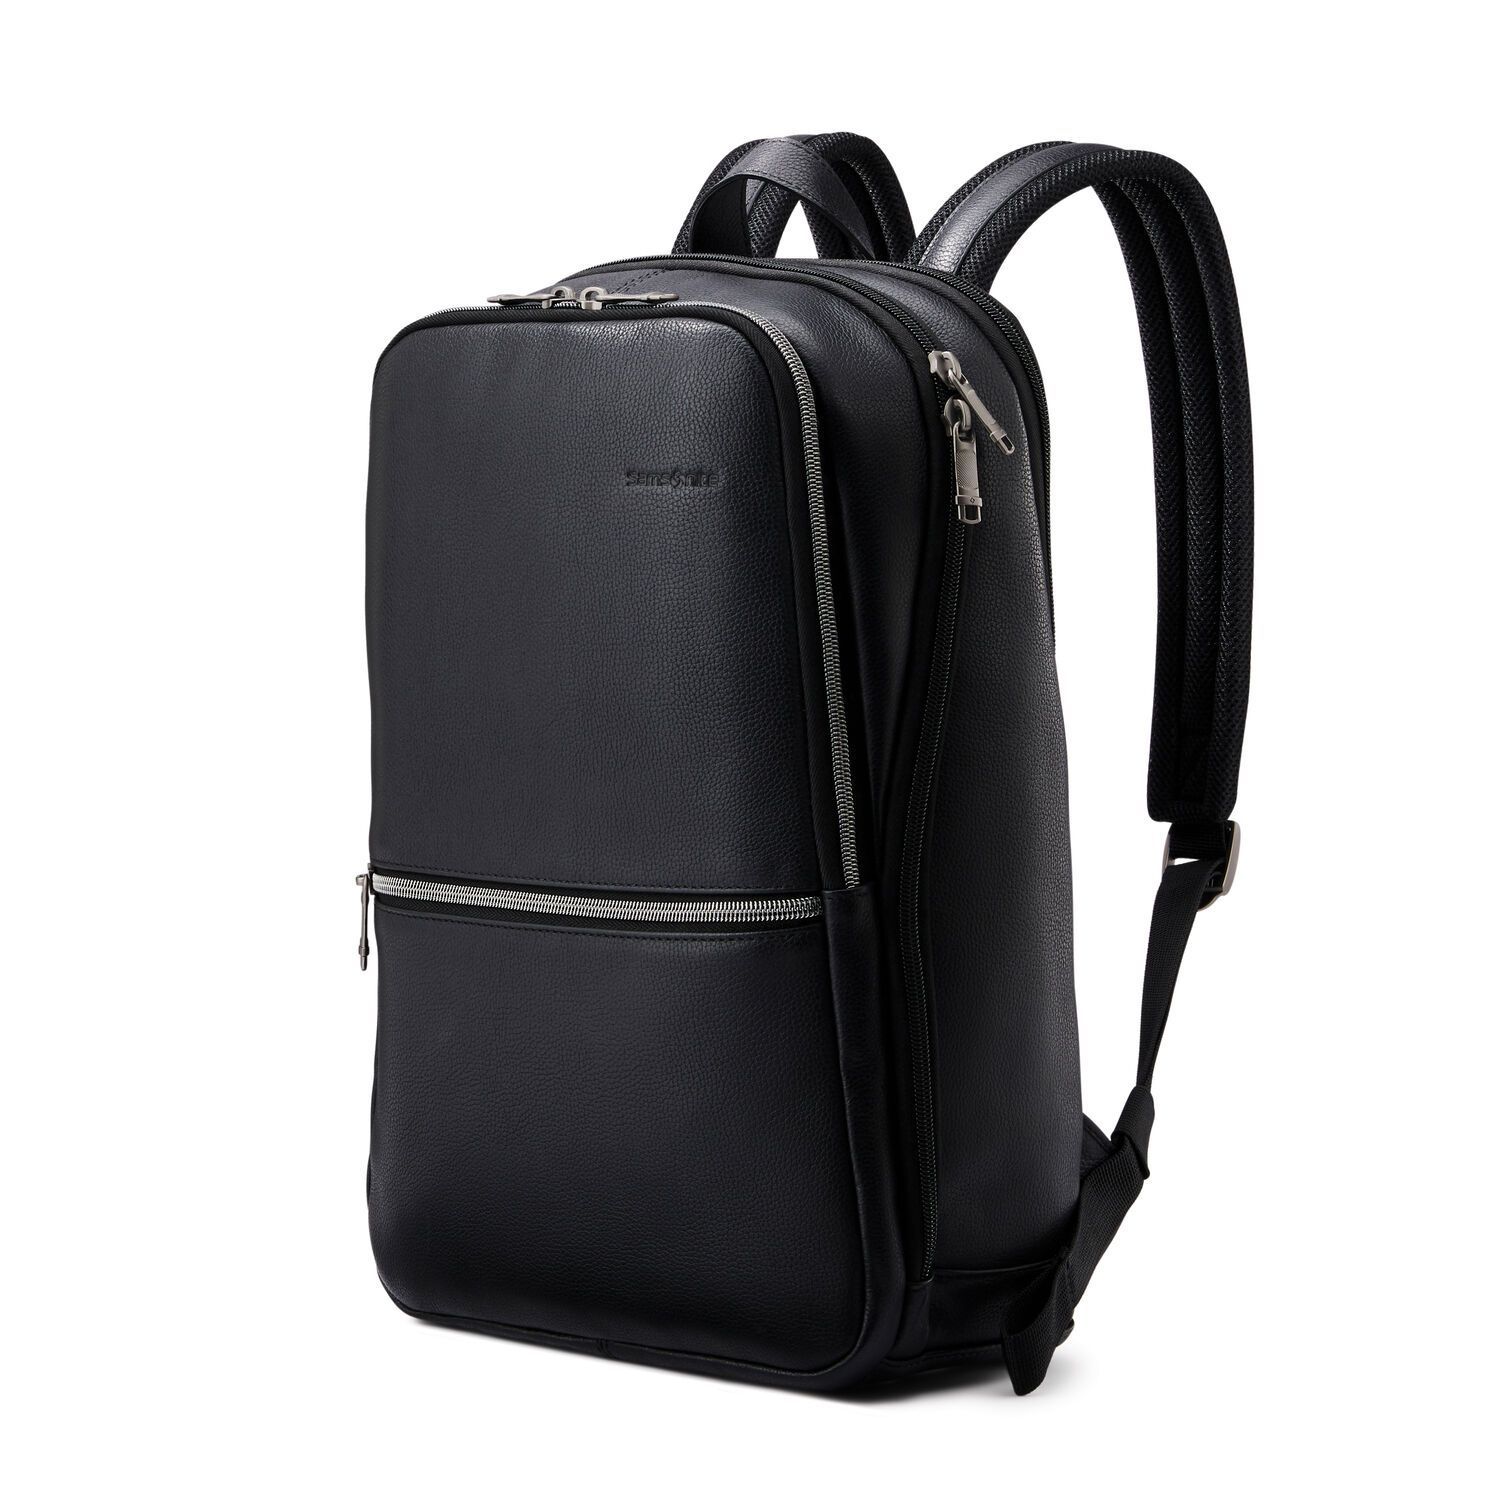 Samsonite Classic Leather Backpack - Black